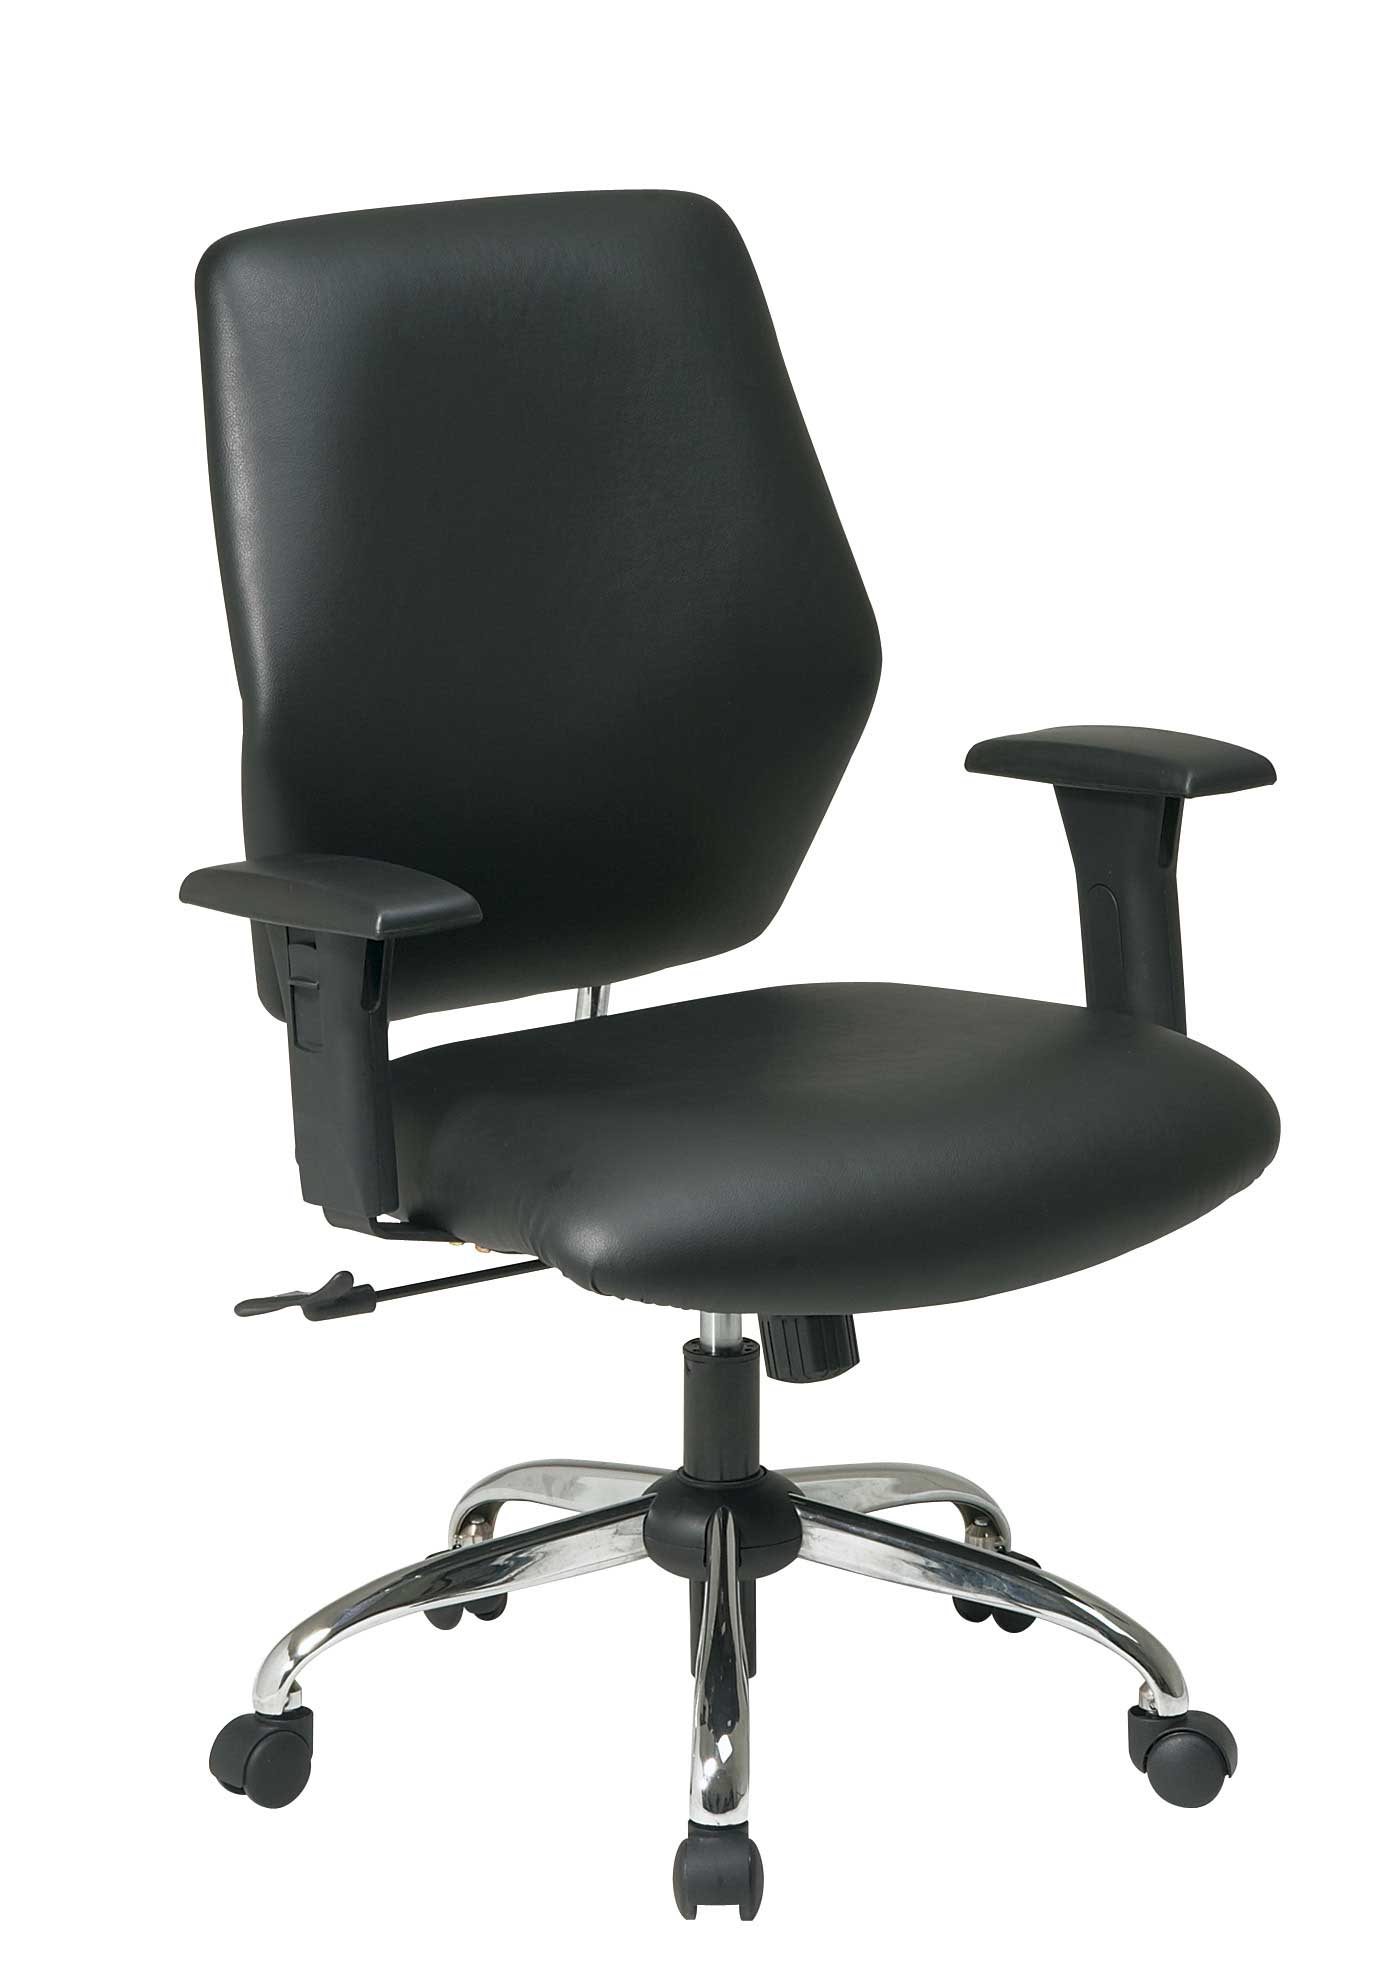 Fancy office chair clipart 